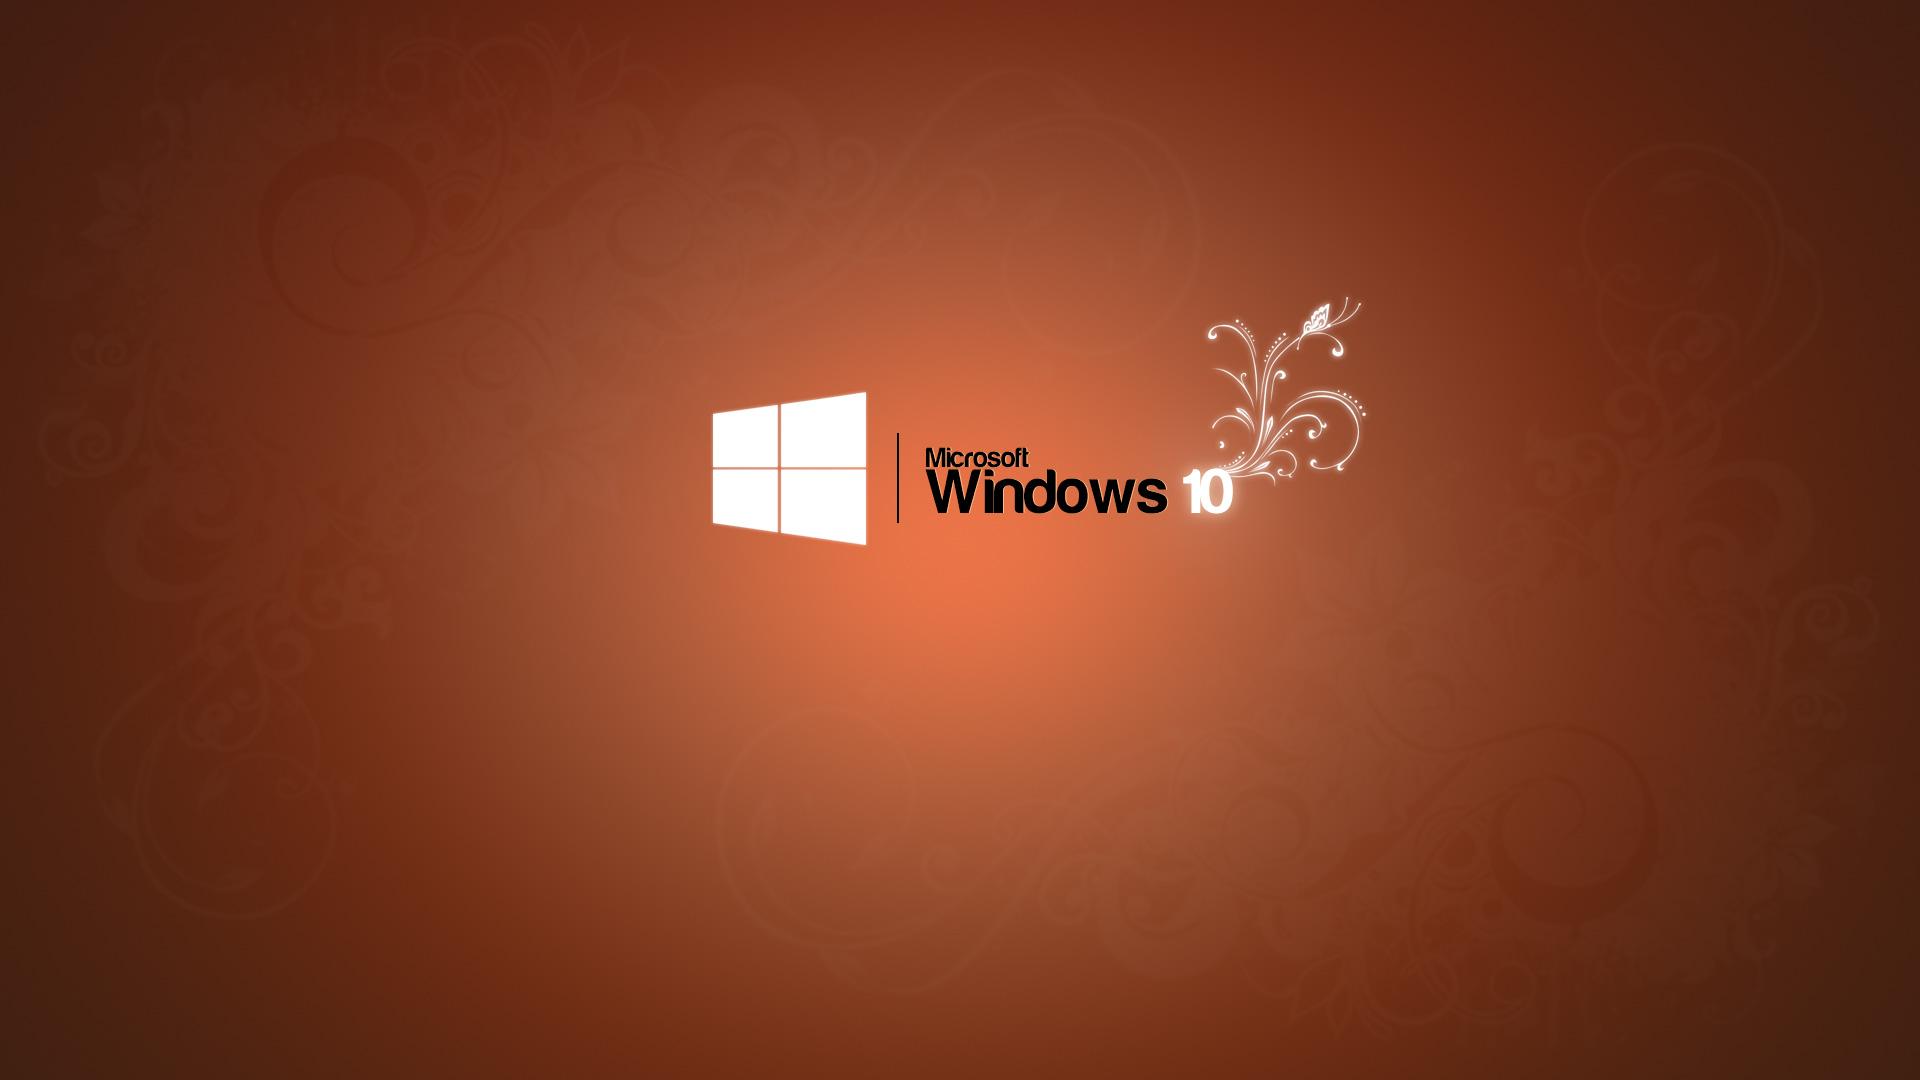 1080P Logo - Windows 10 Wallpaper 1080p Full HD Logo on Orange Background